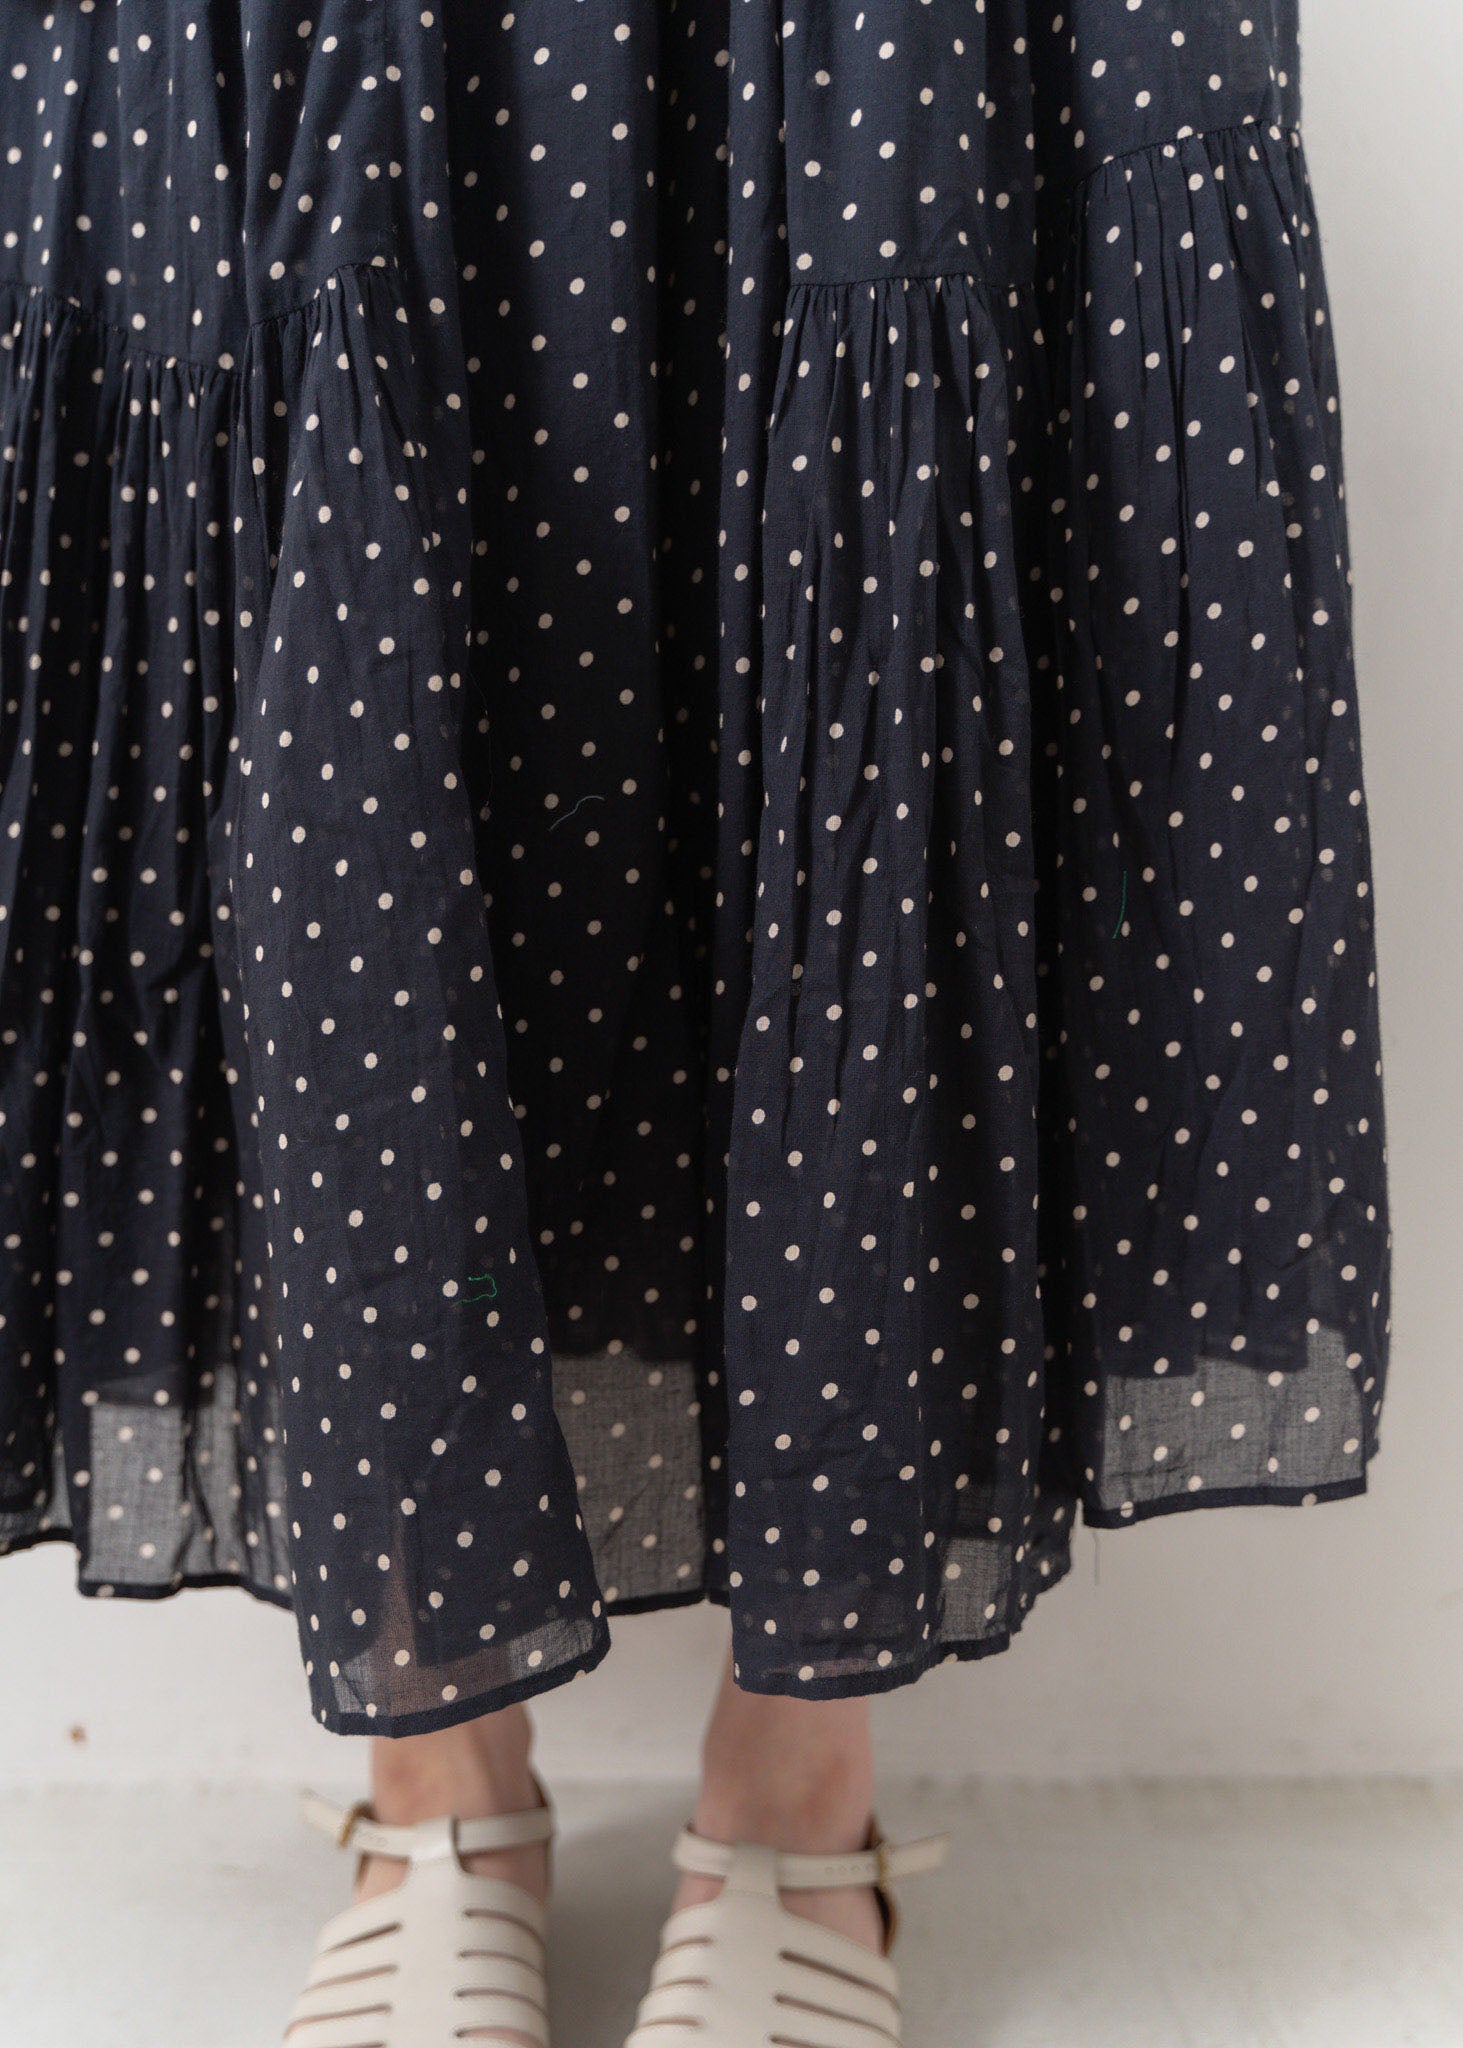 Cotton Voile Dot Print Sleeveless Dress | Pasand by ne Quittez pas